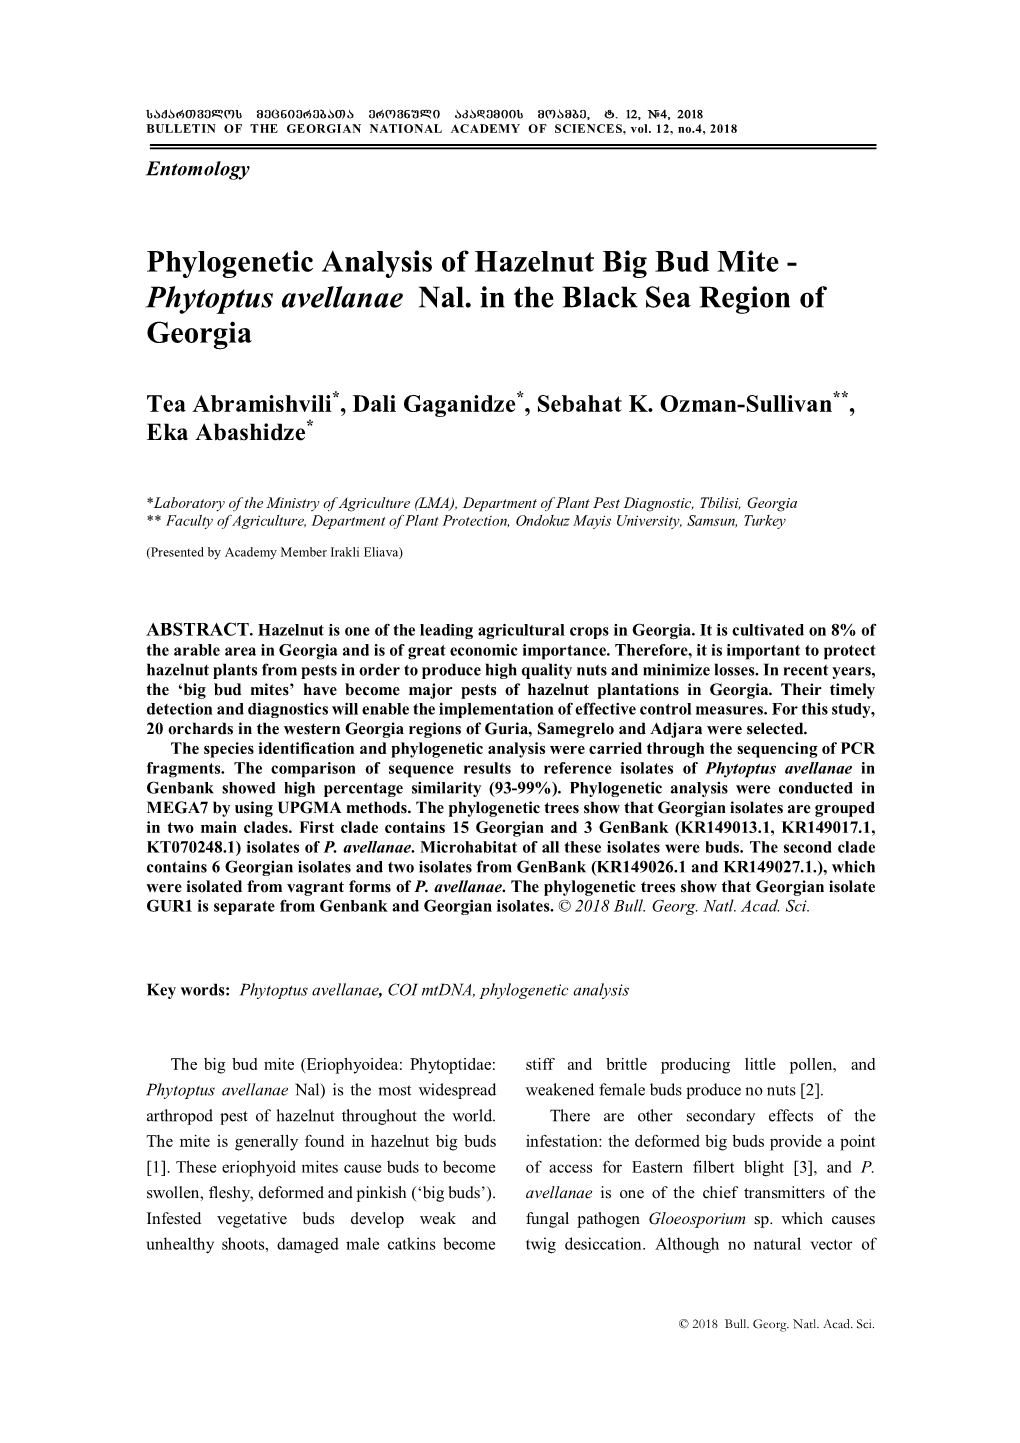 Phylogenetic Analysis of Hazelnut Big Bud Mite - Phytoptus Avellanae Nal